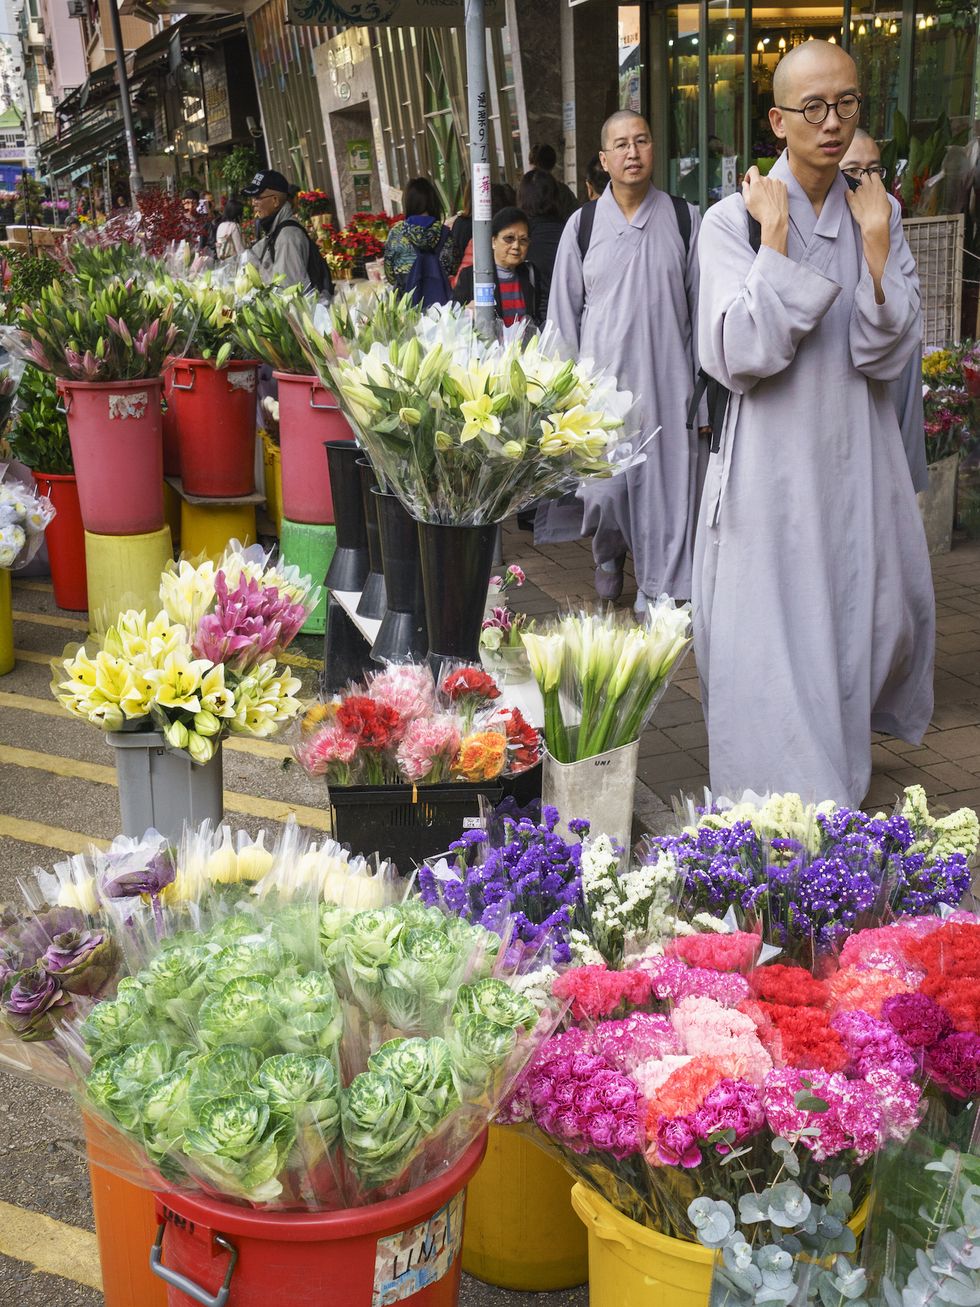 Floristry, Flower, Cut flowers, Public space, Flowerpot, Plant, Selling, Market, Human settlement, Marketplace, 